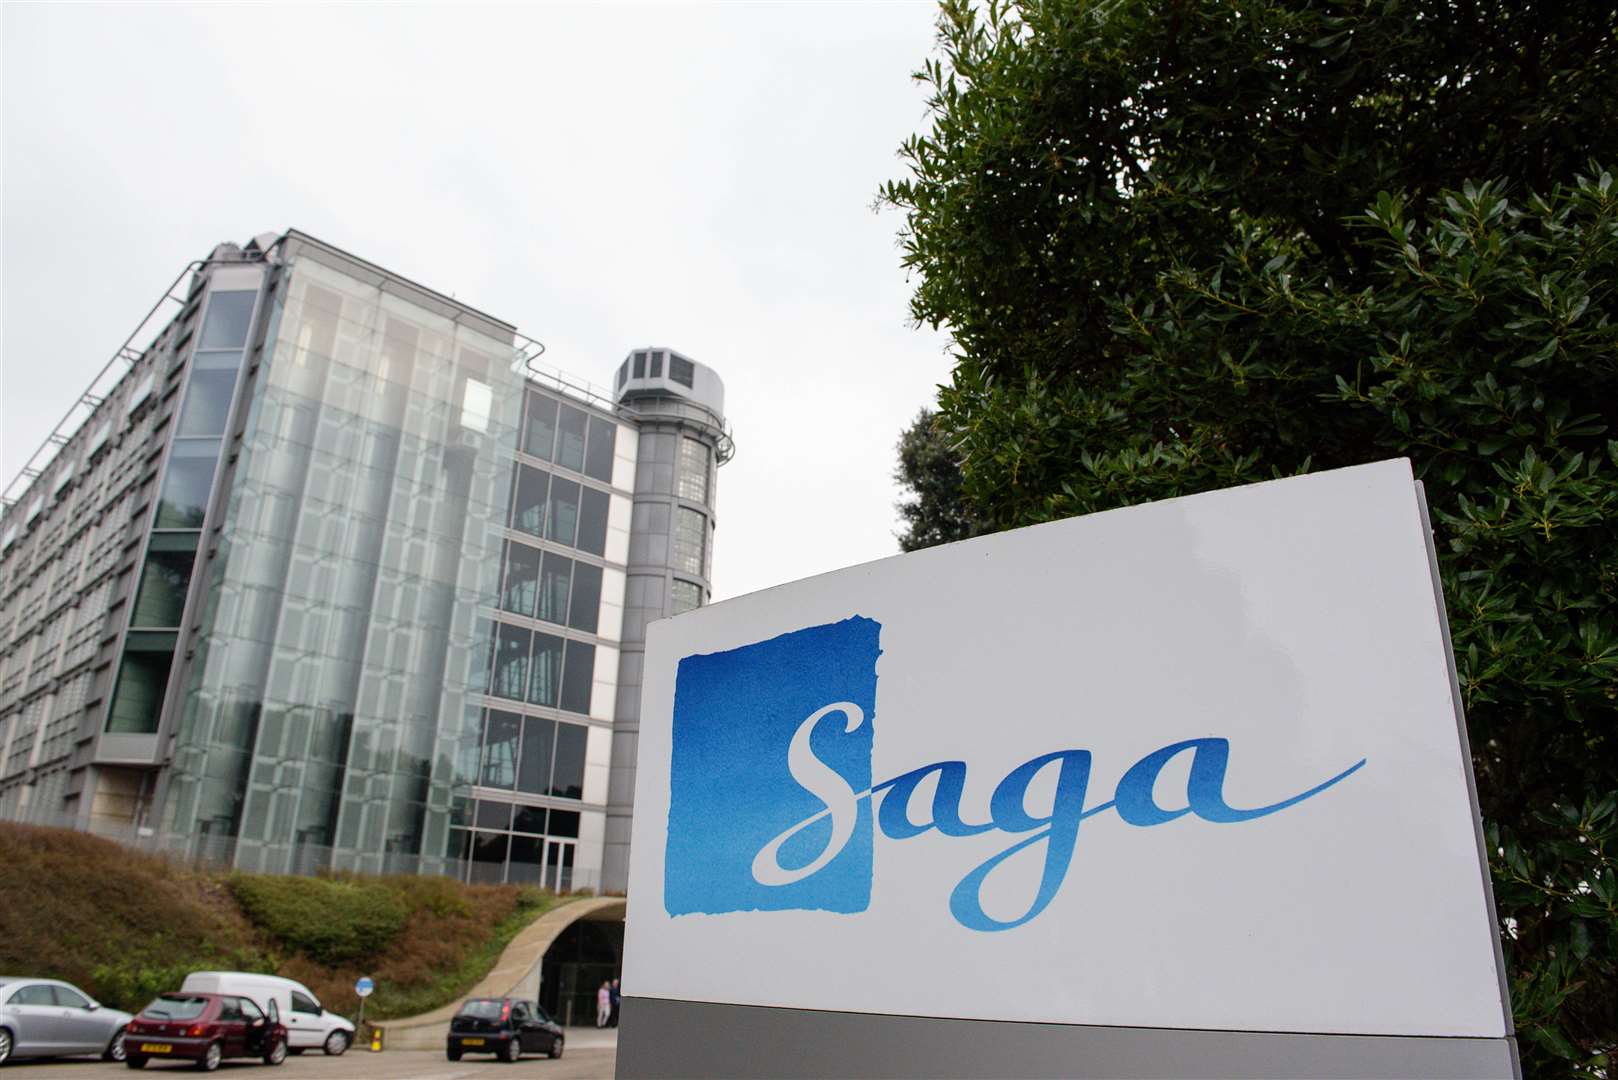 Saga's head office is based in Sandgate, Folkestone